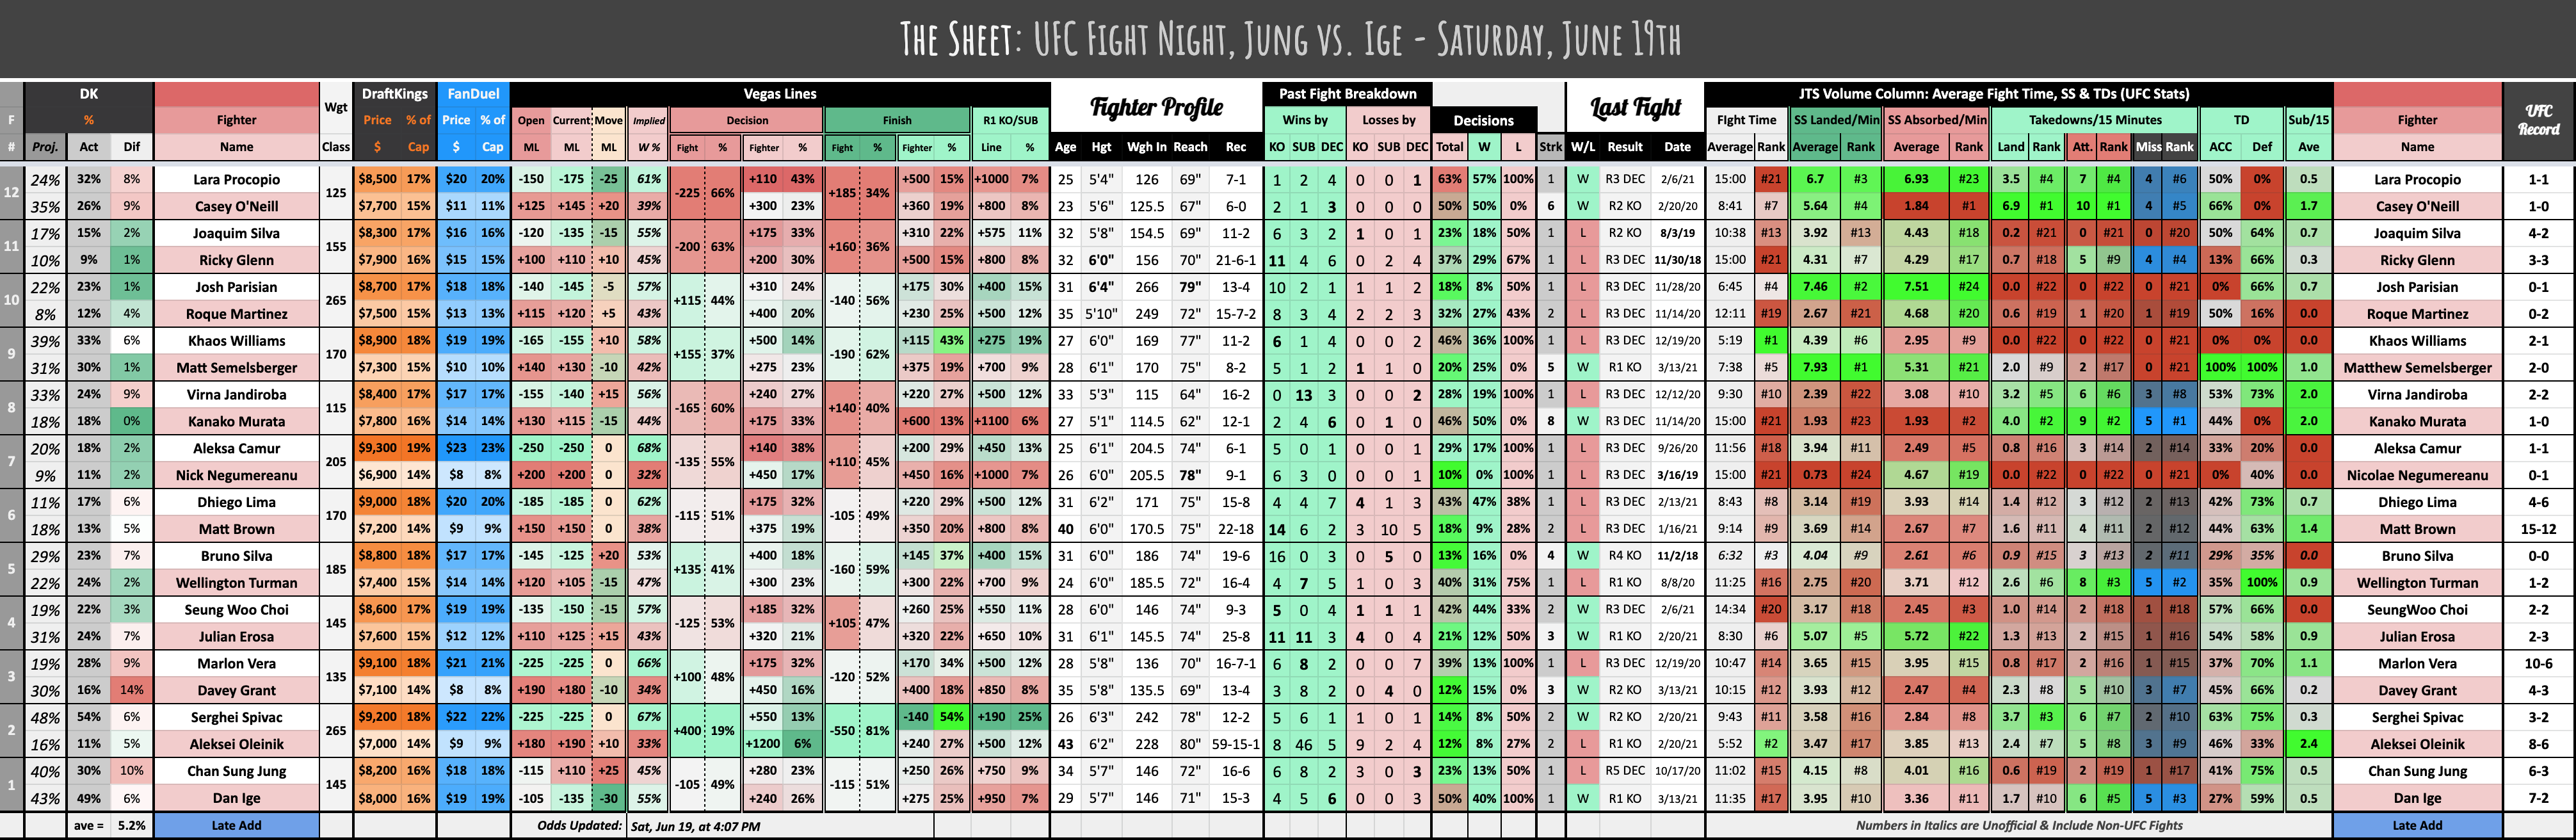 UFC Fight Night, Jung vs. Ige - Saturday, June 19th